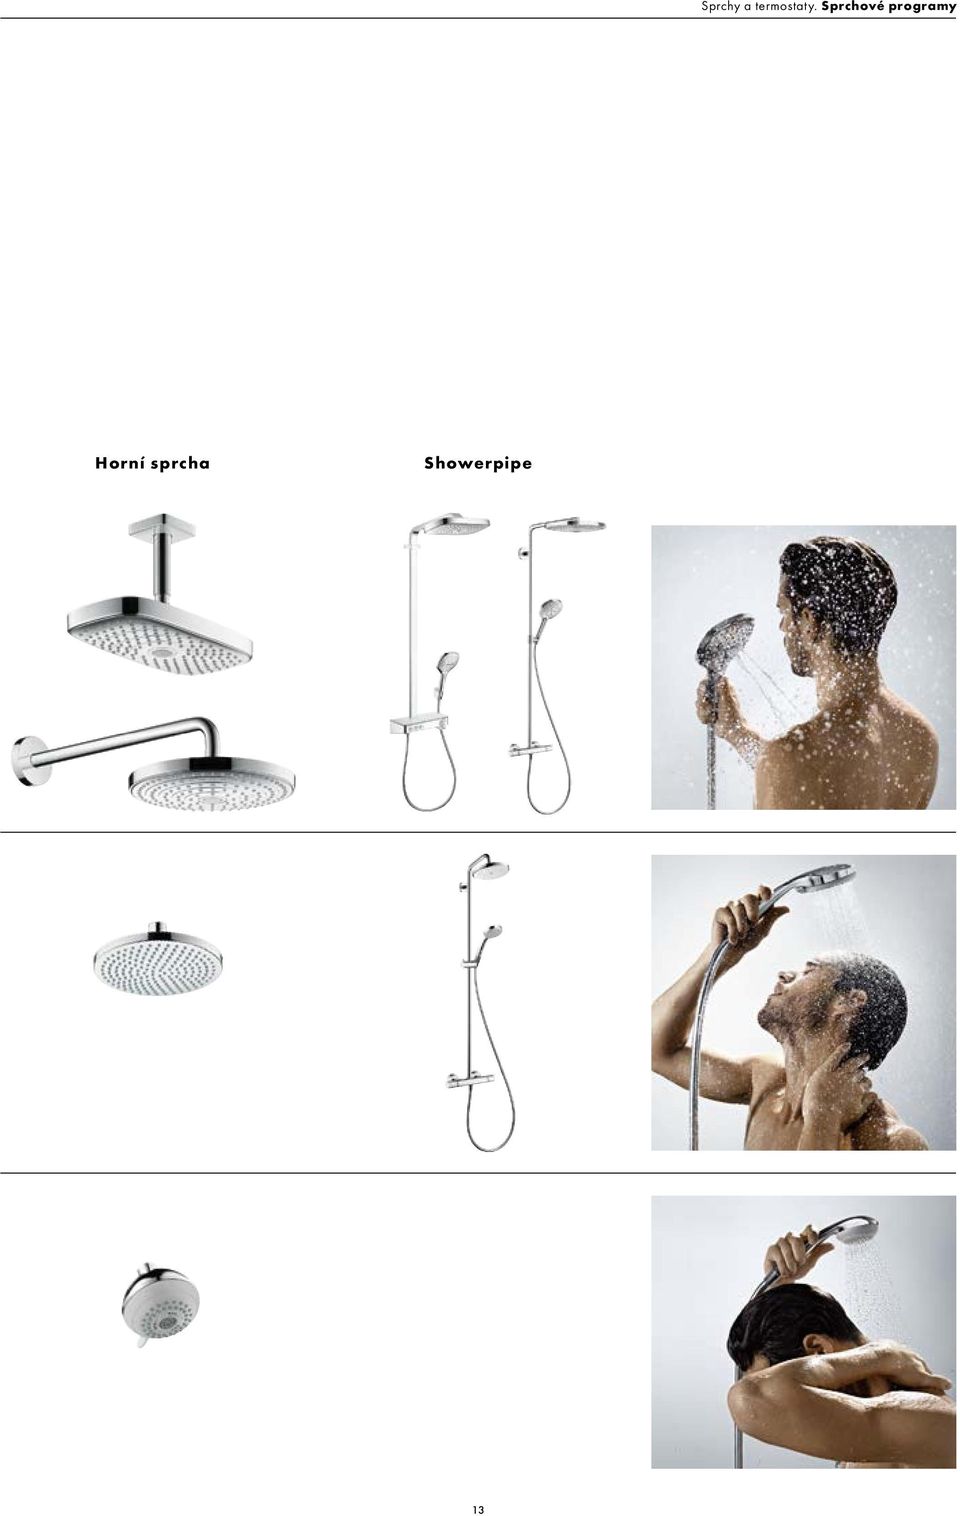 Sprchové